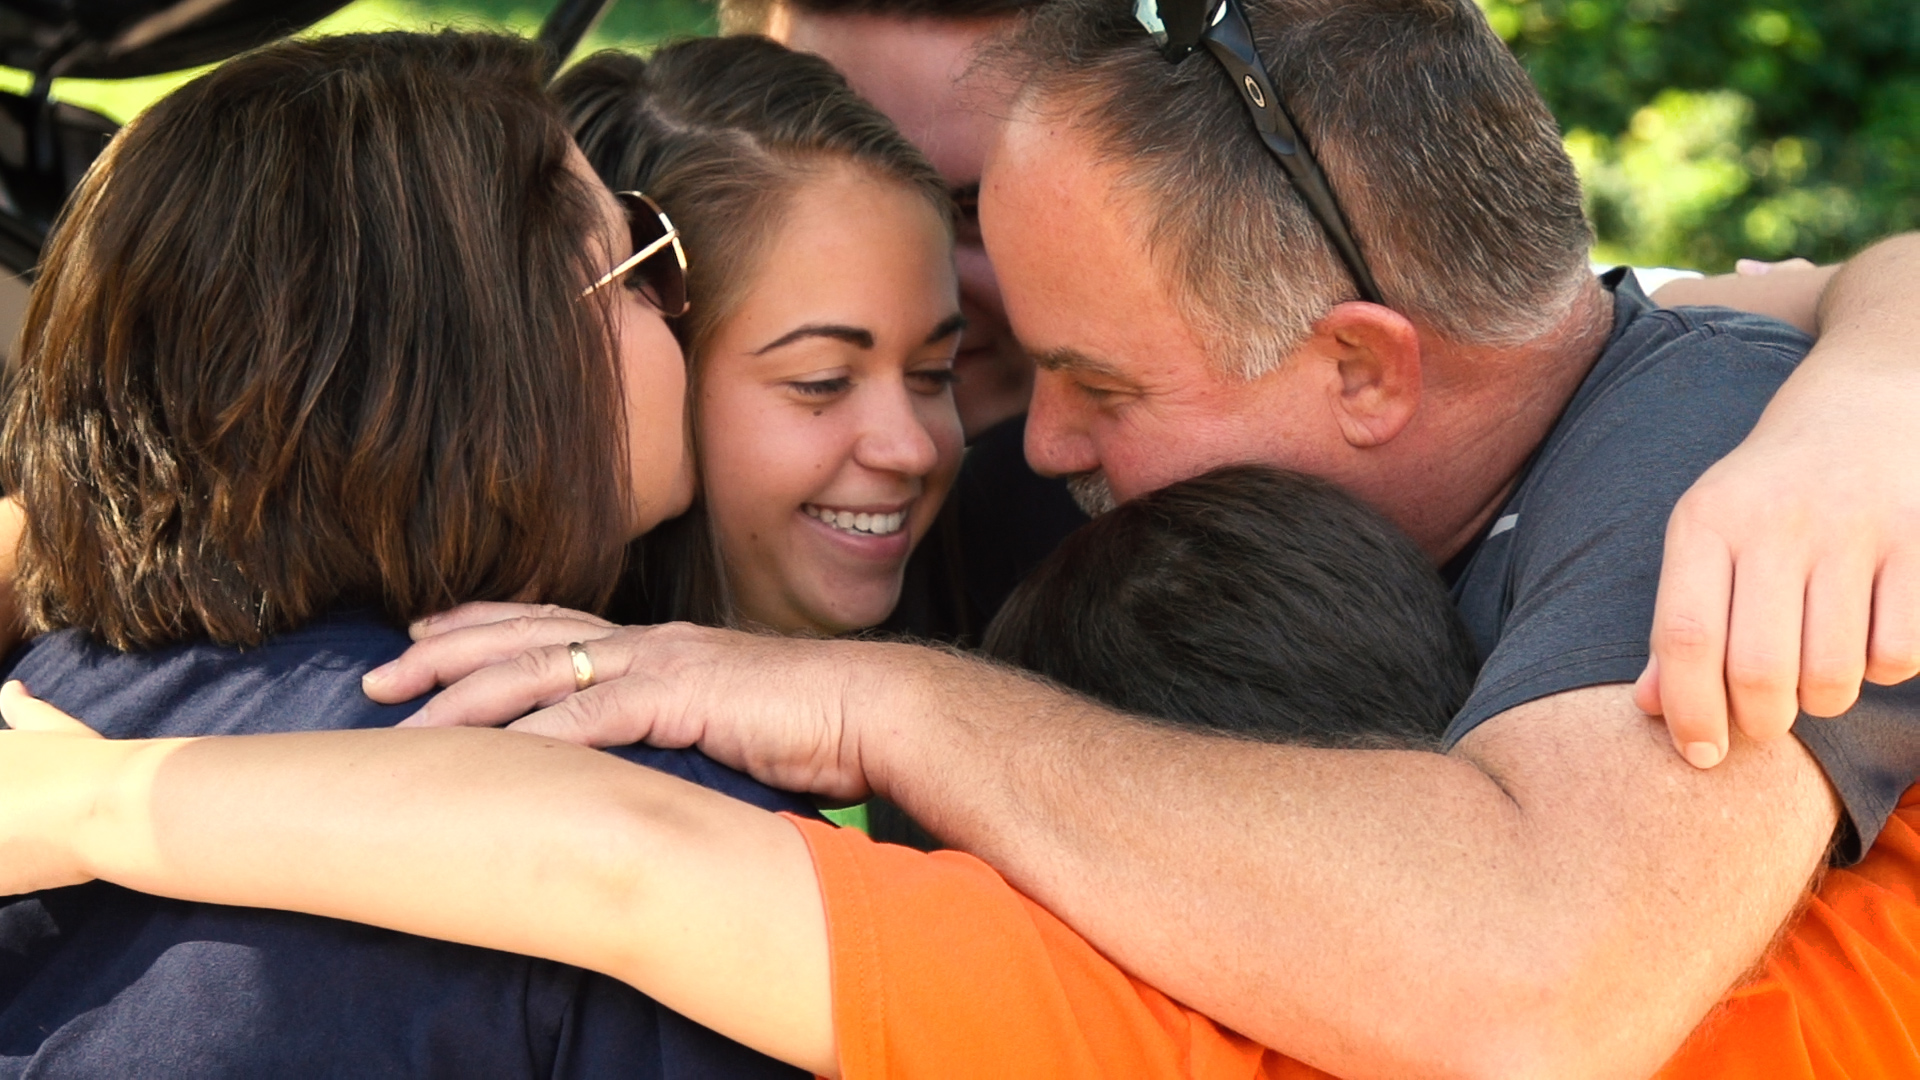 Family gives a student a group hug